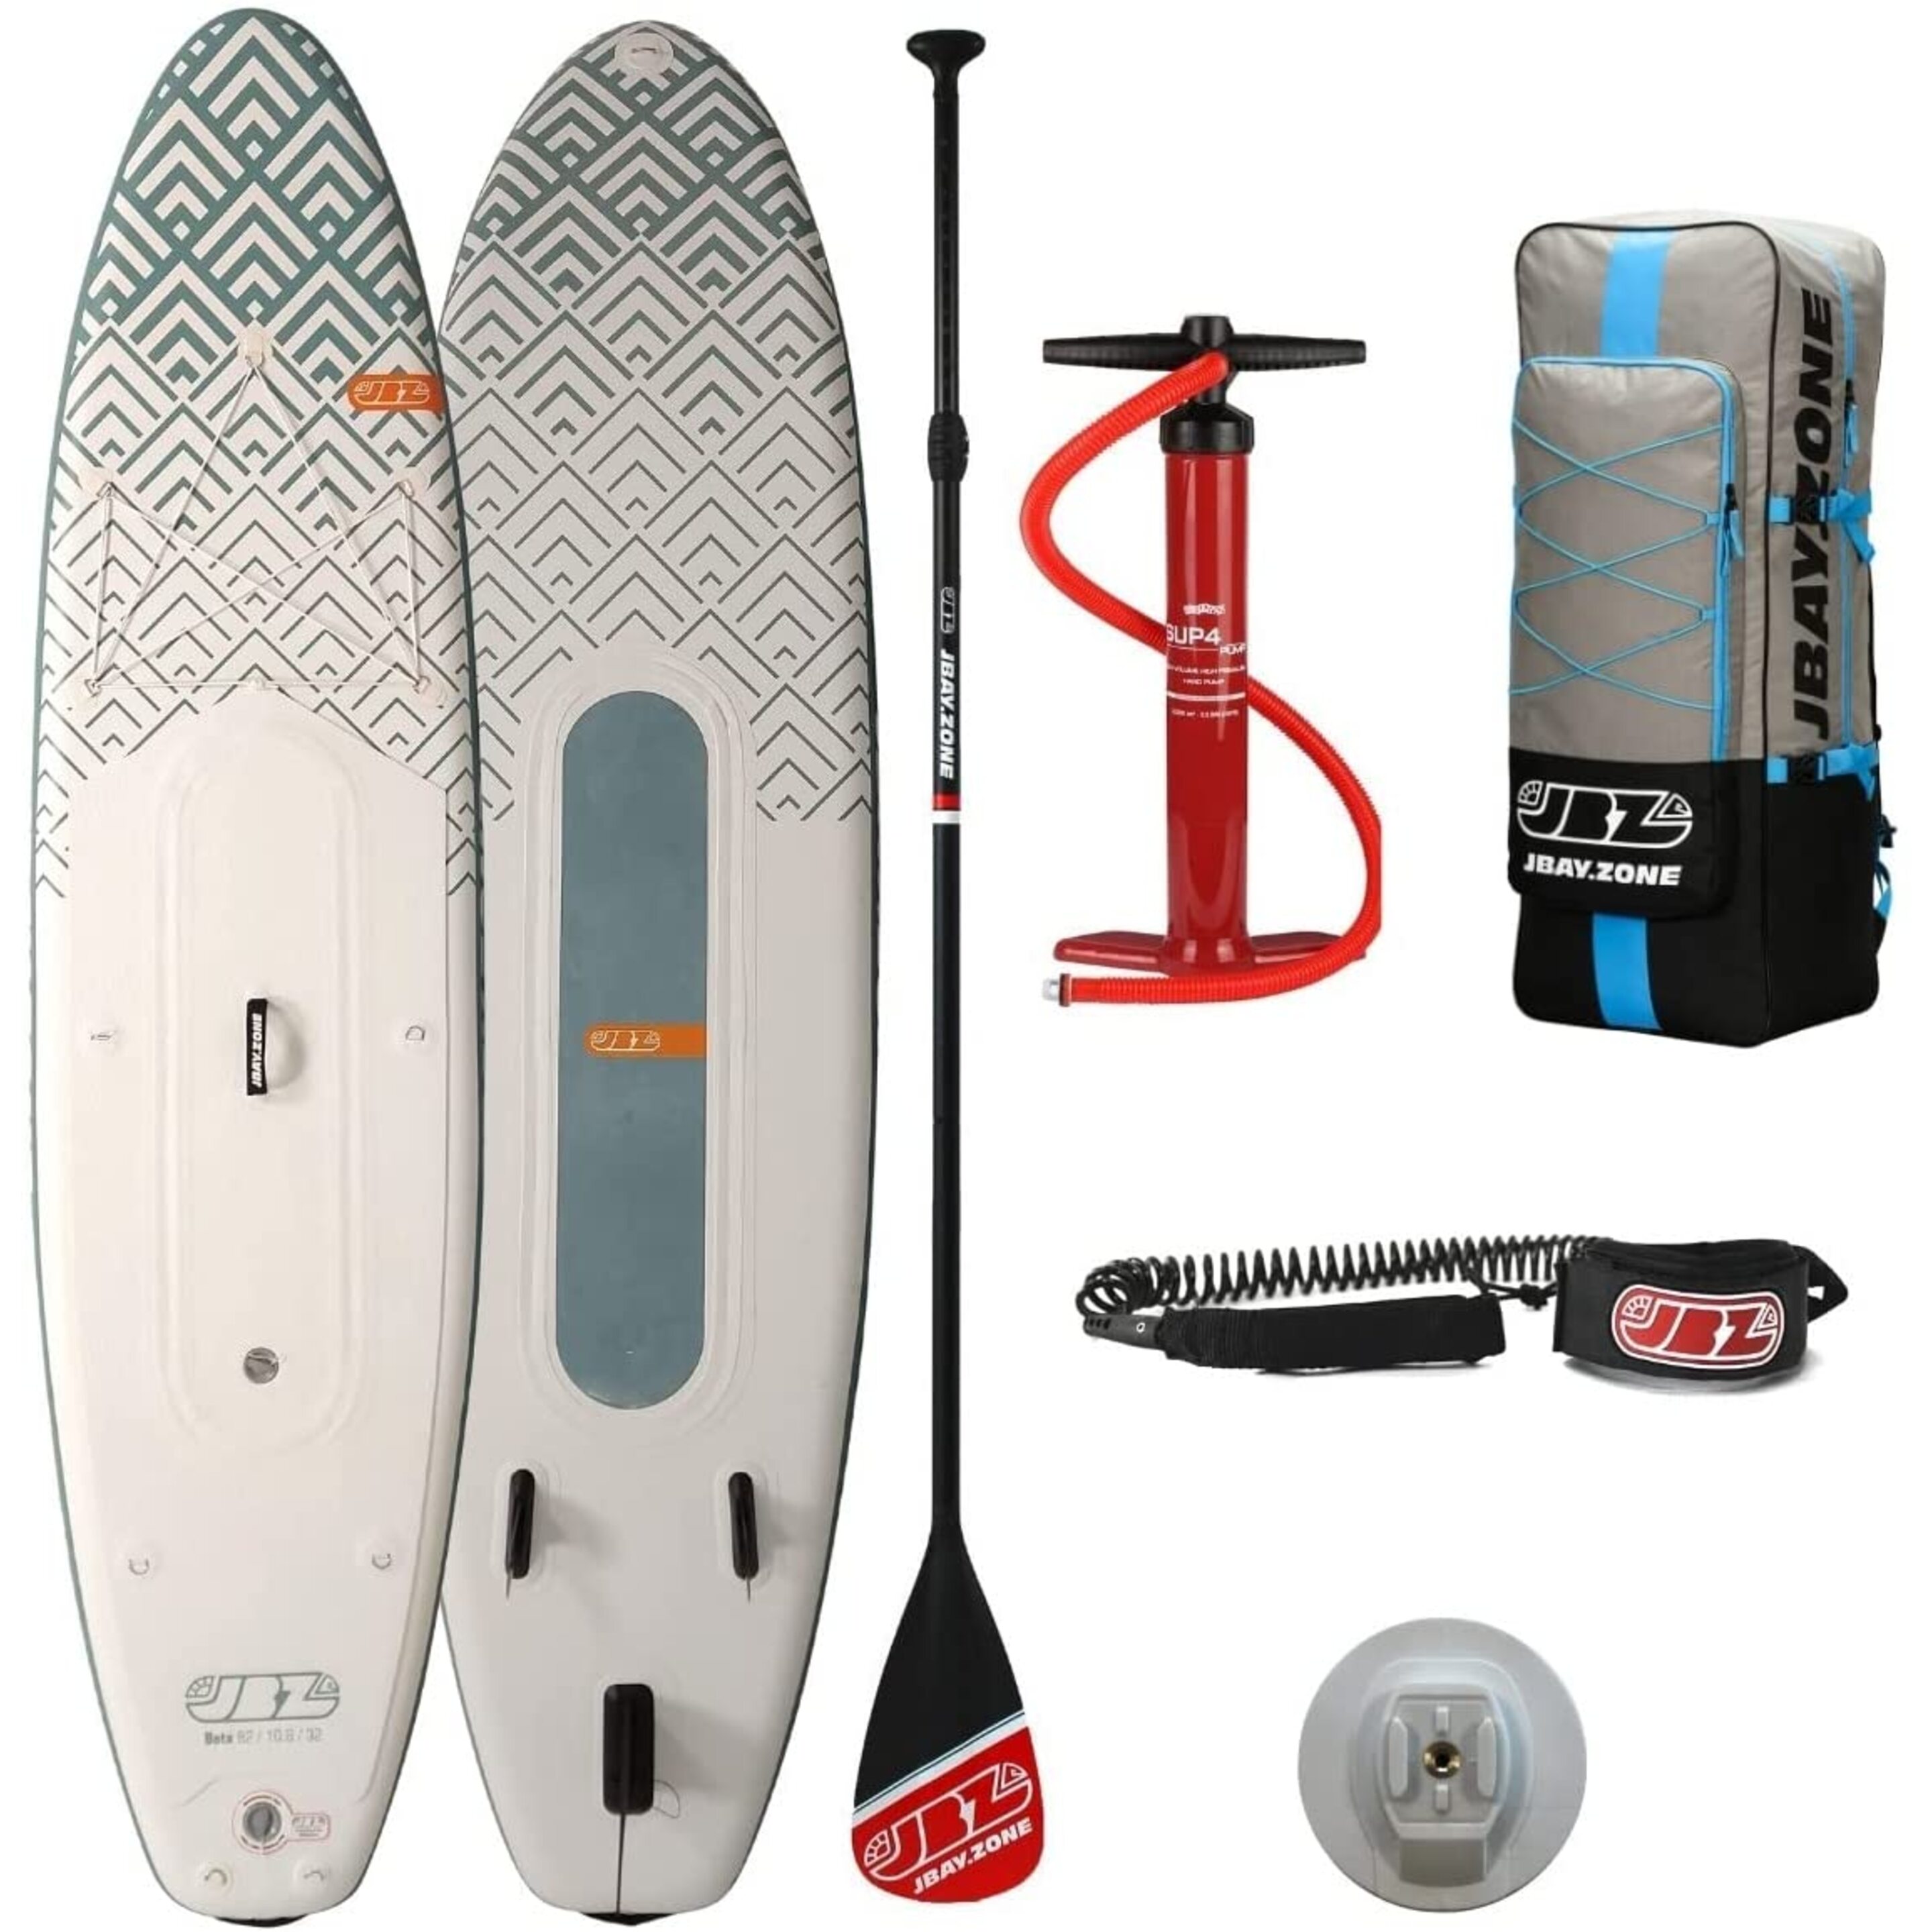 Tabla De Stand Up Paddle Surf Sup Hinchable Jbay.zone Double Chamber Beta B2 - verde-blanco - 